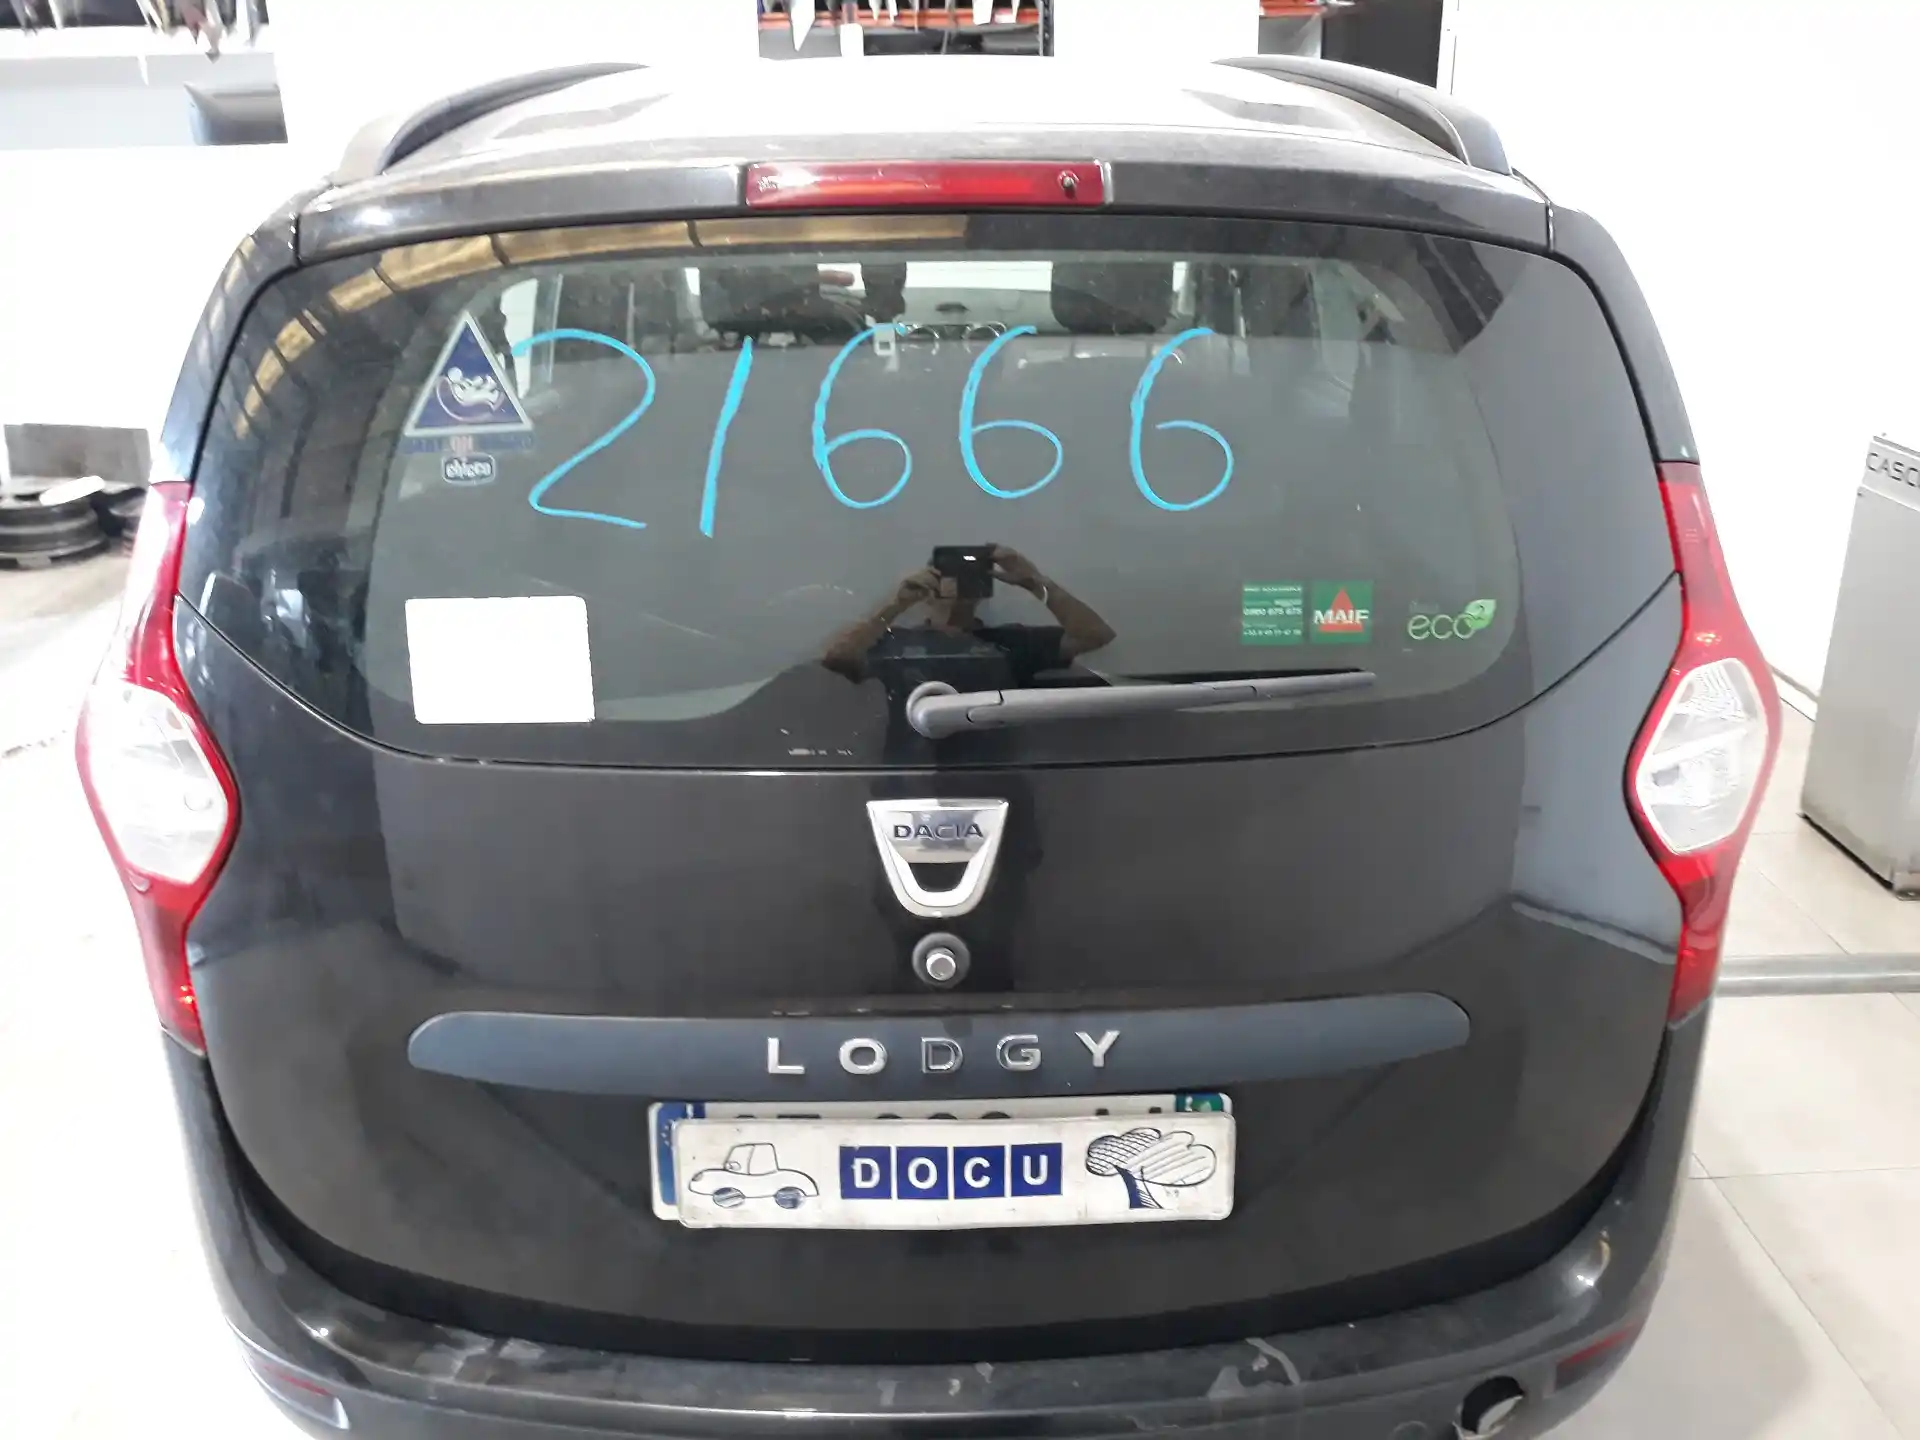 Dacia Lodgy 2013 second hand price